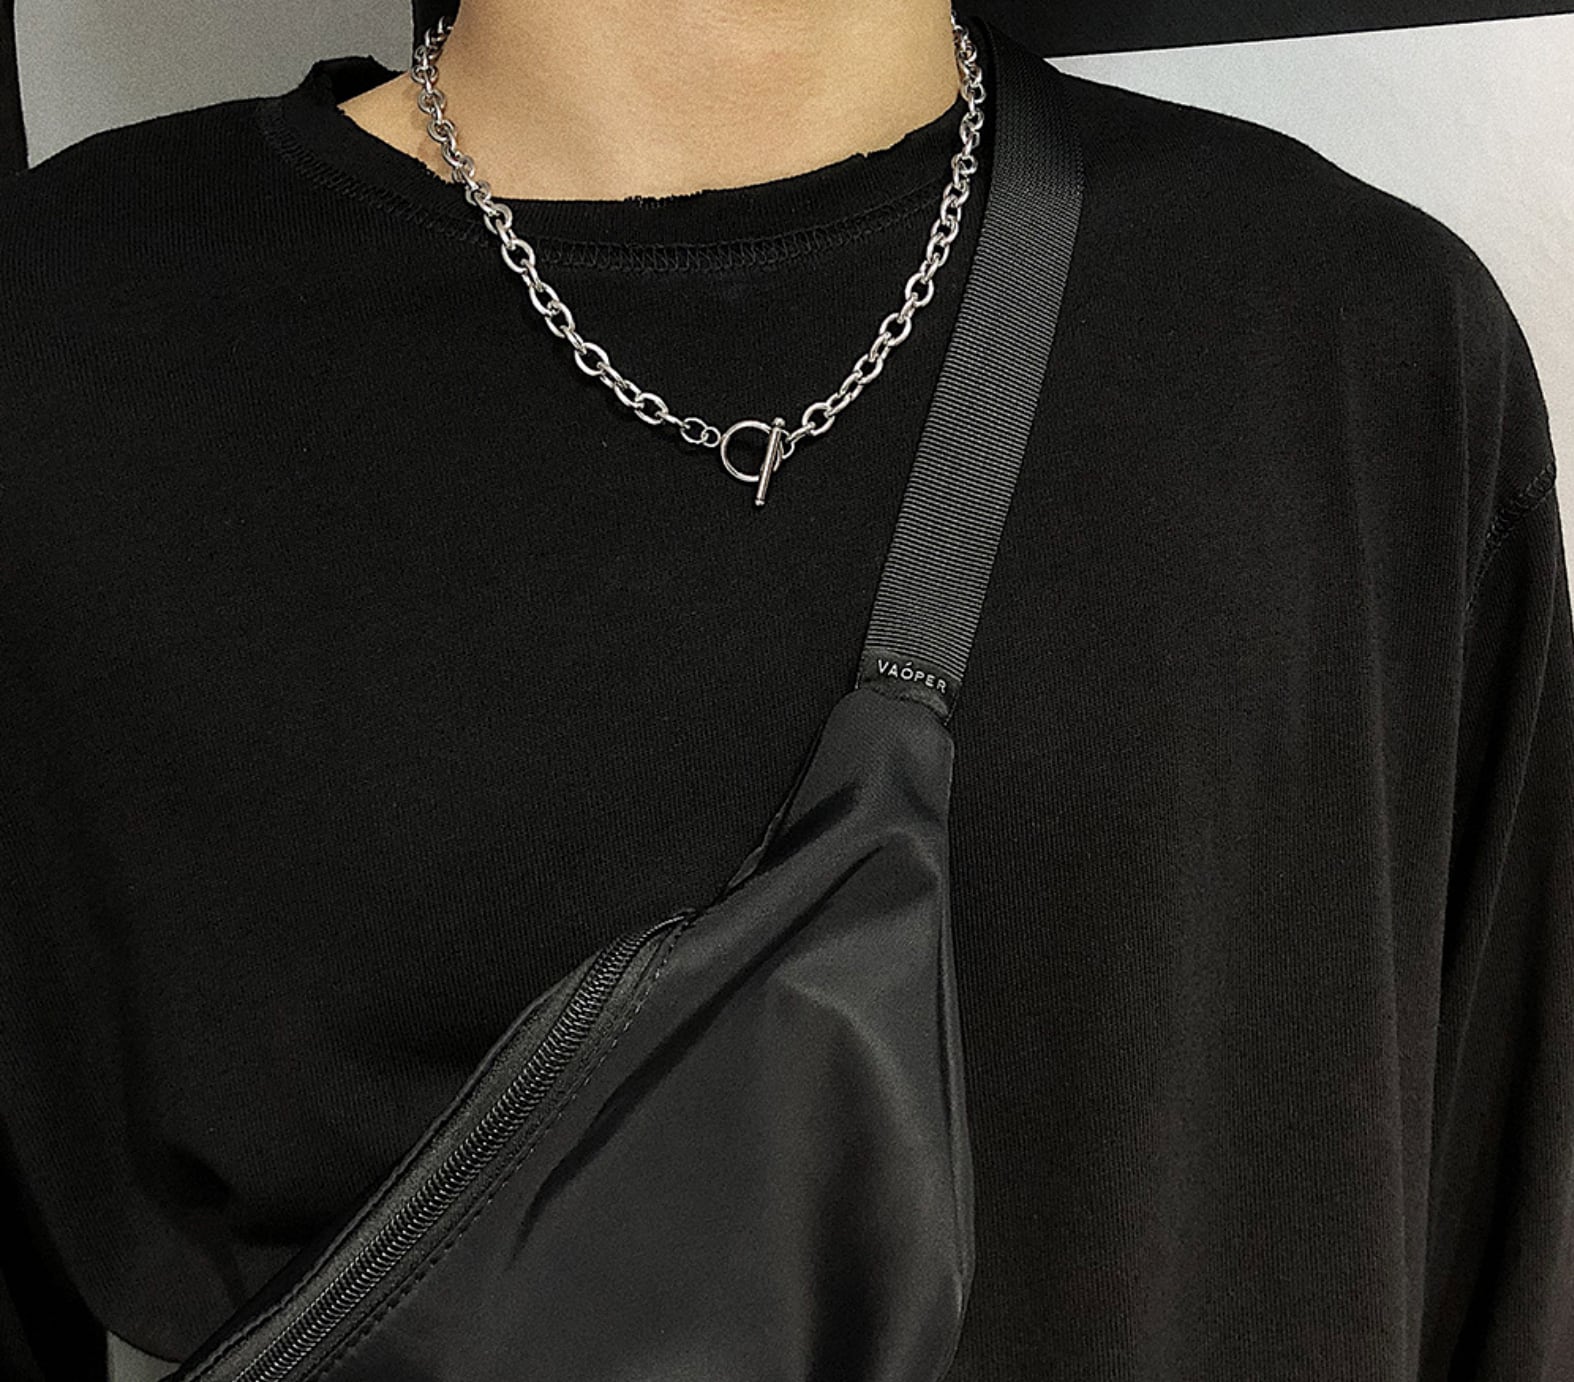 316l chain necklace